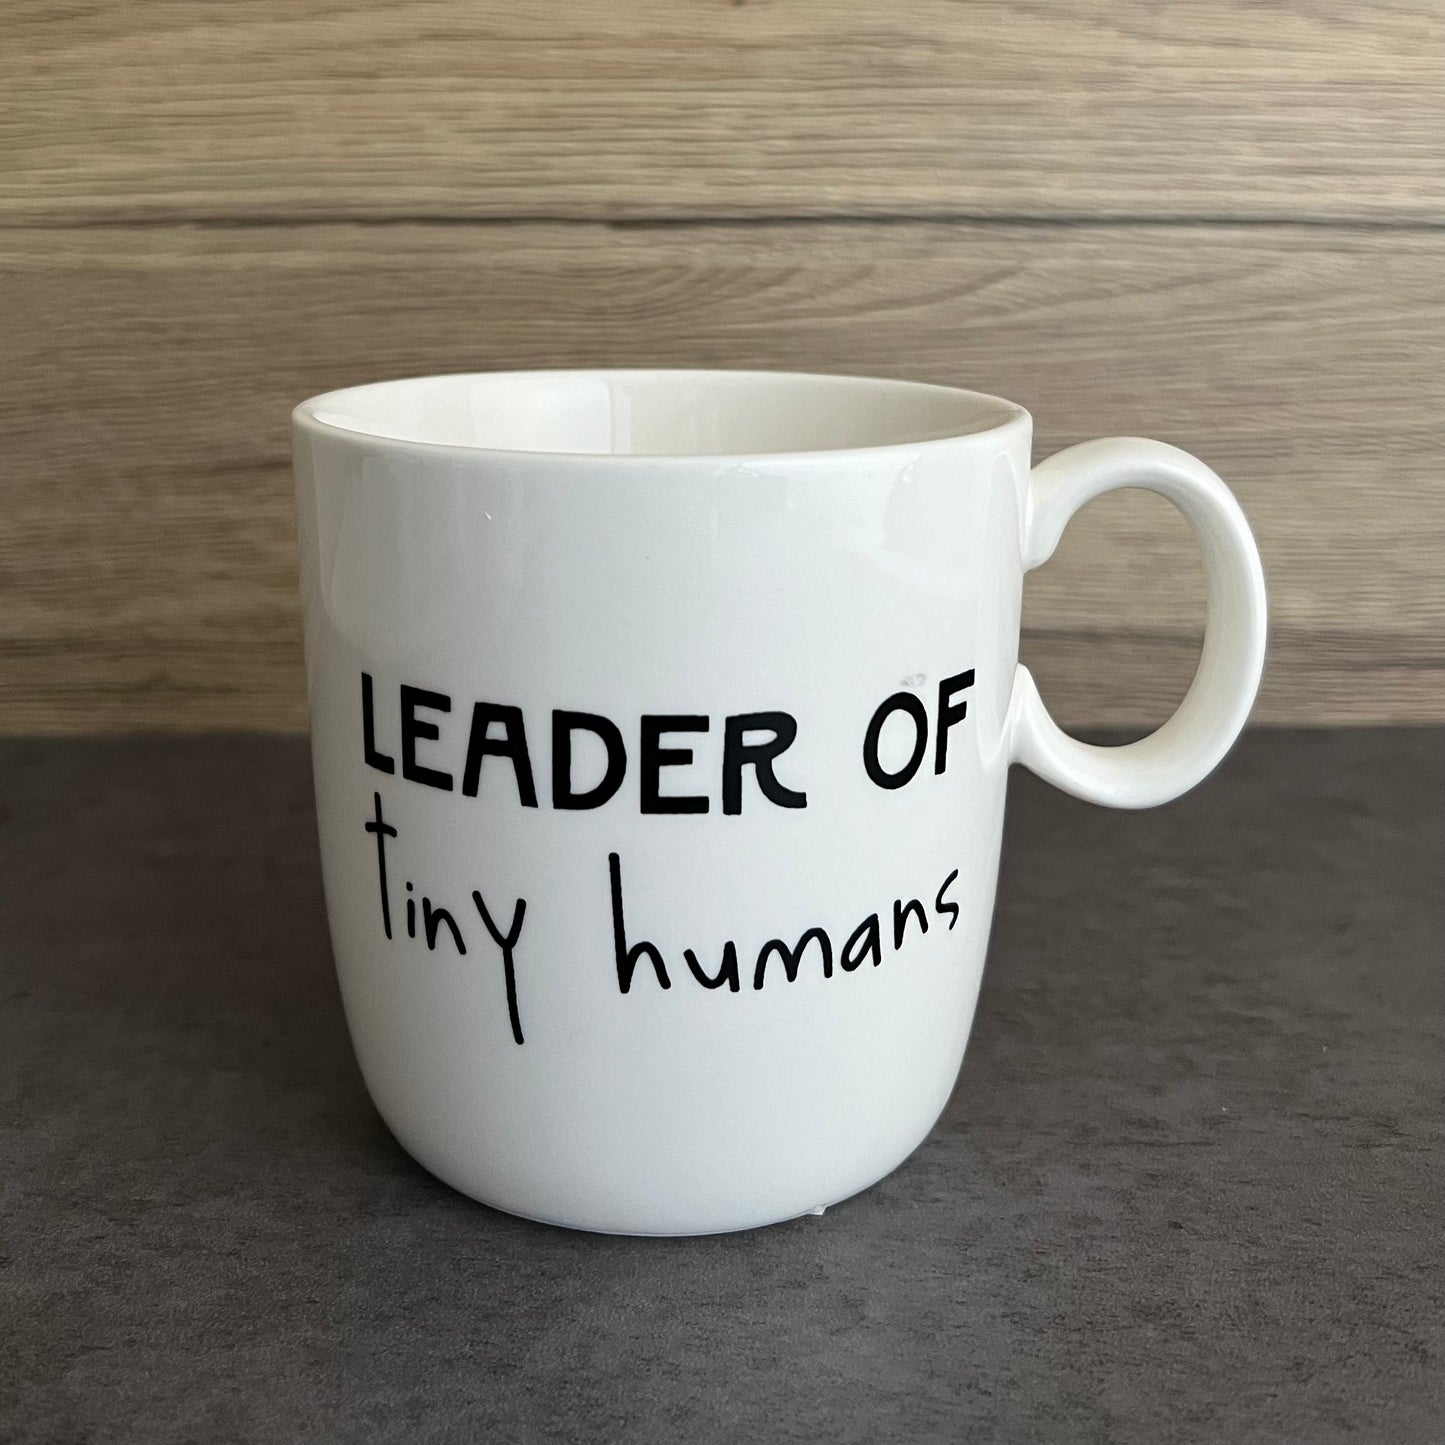 Leader of tiny humans mug